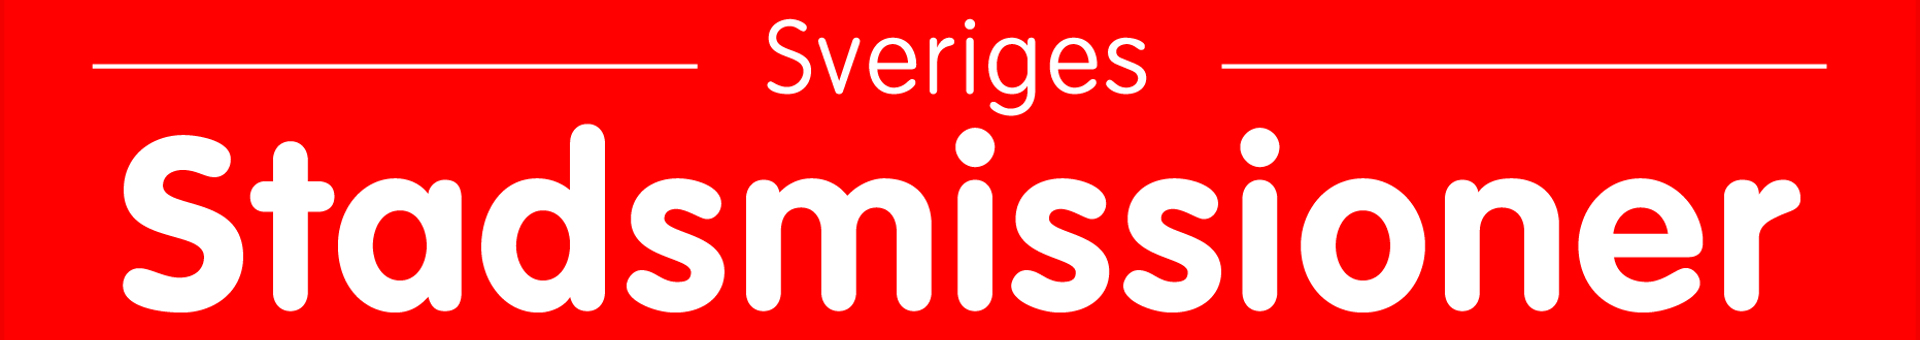 Sveriges_Stadsmissioner_300dpib.jpg (1)